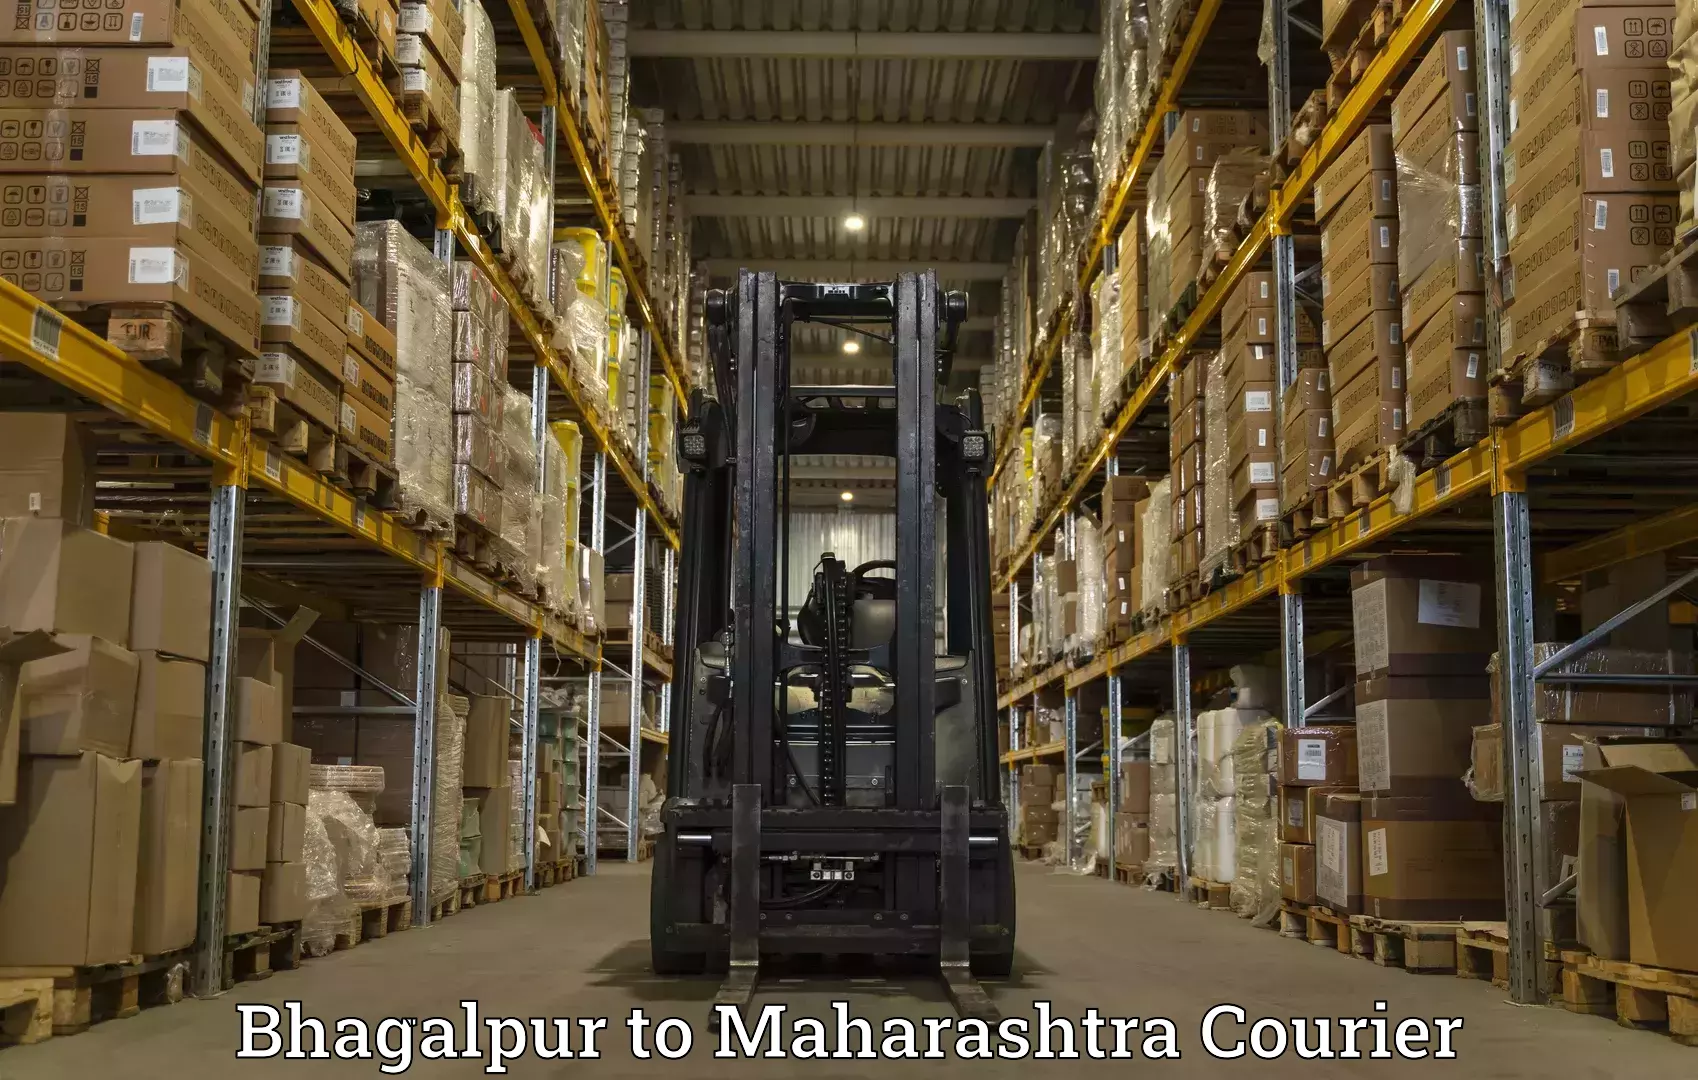 Courier service partnerships Bhagalpur to IIIT Pune